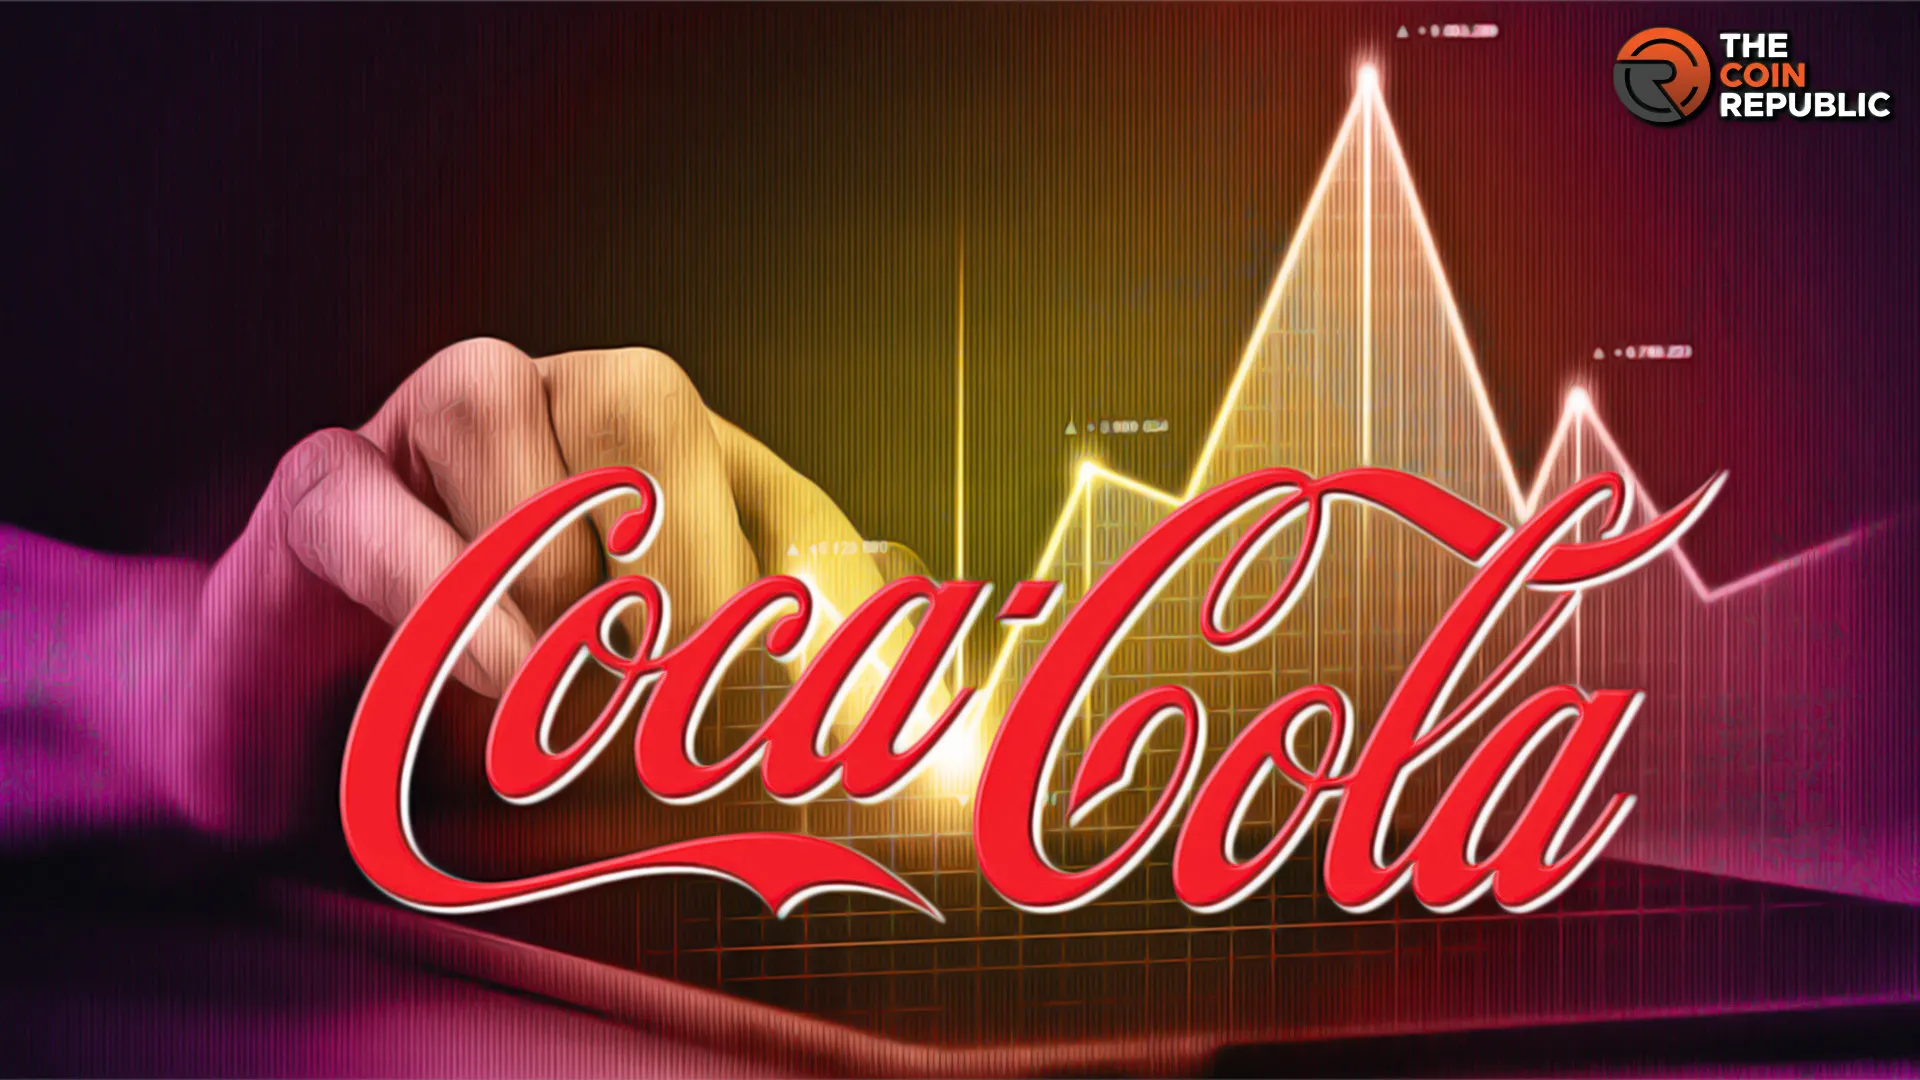 Coca-Cola Company Stock Analysis: Will KO Cross the $65 Level?